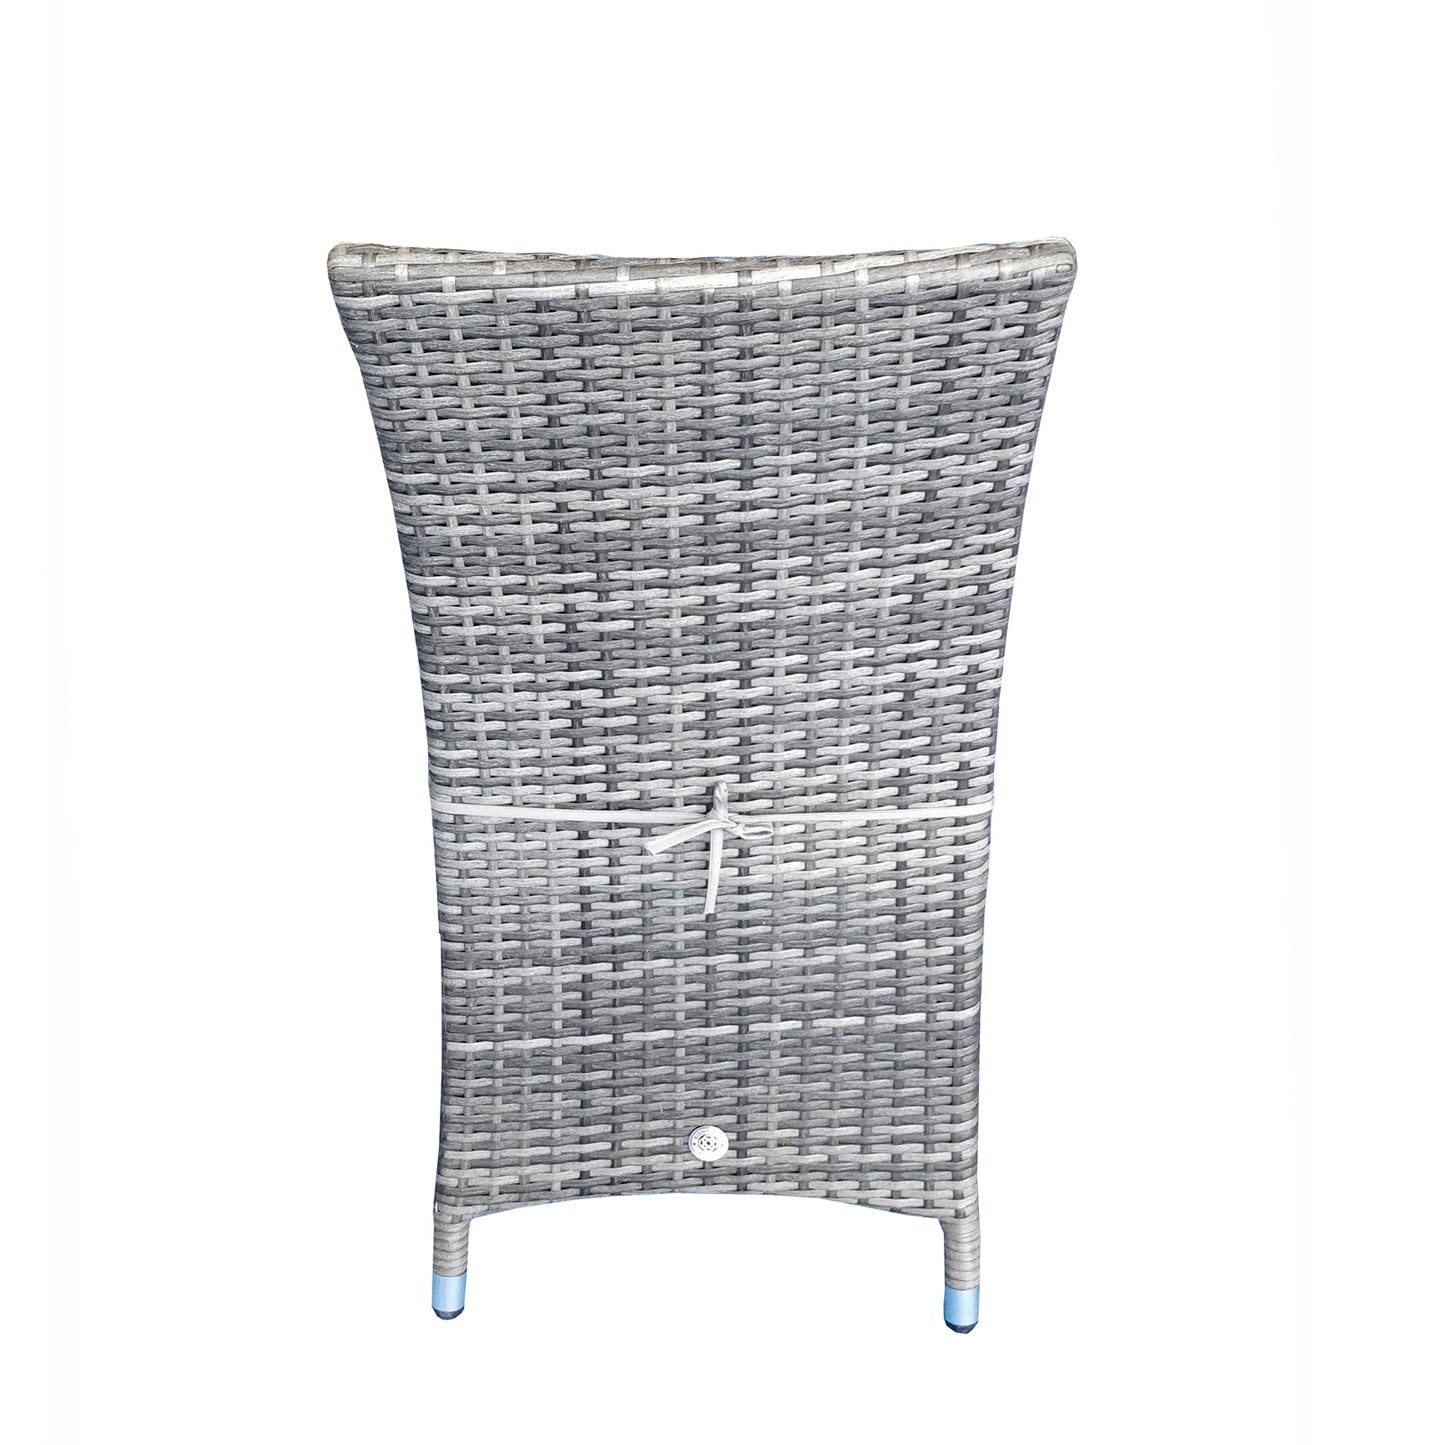 Emily Rattan Armless Chair in Grey | Emil0209